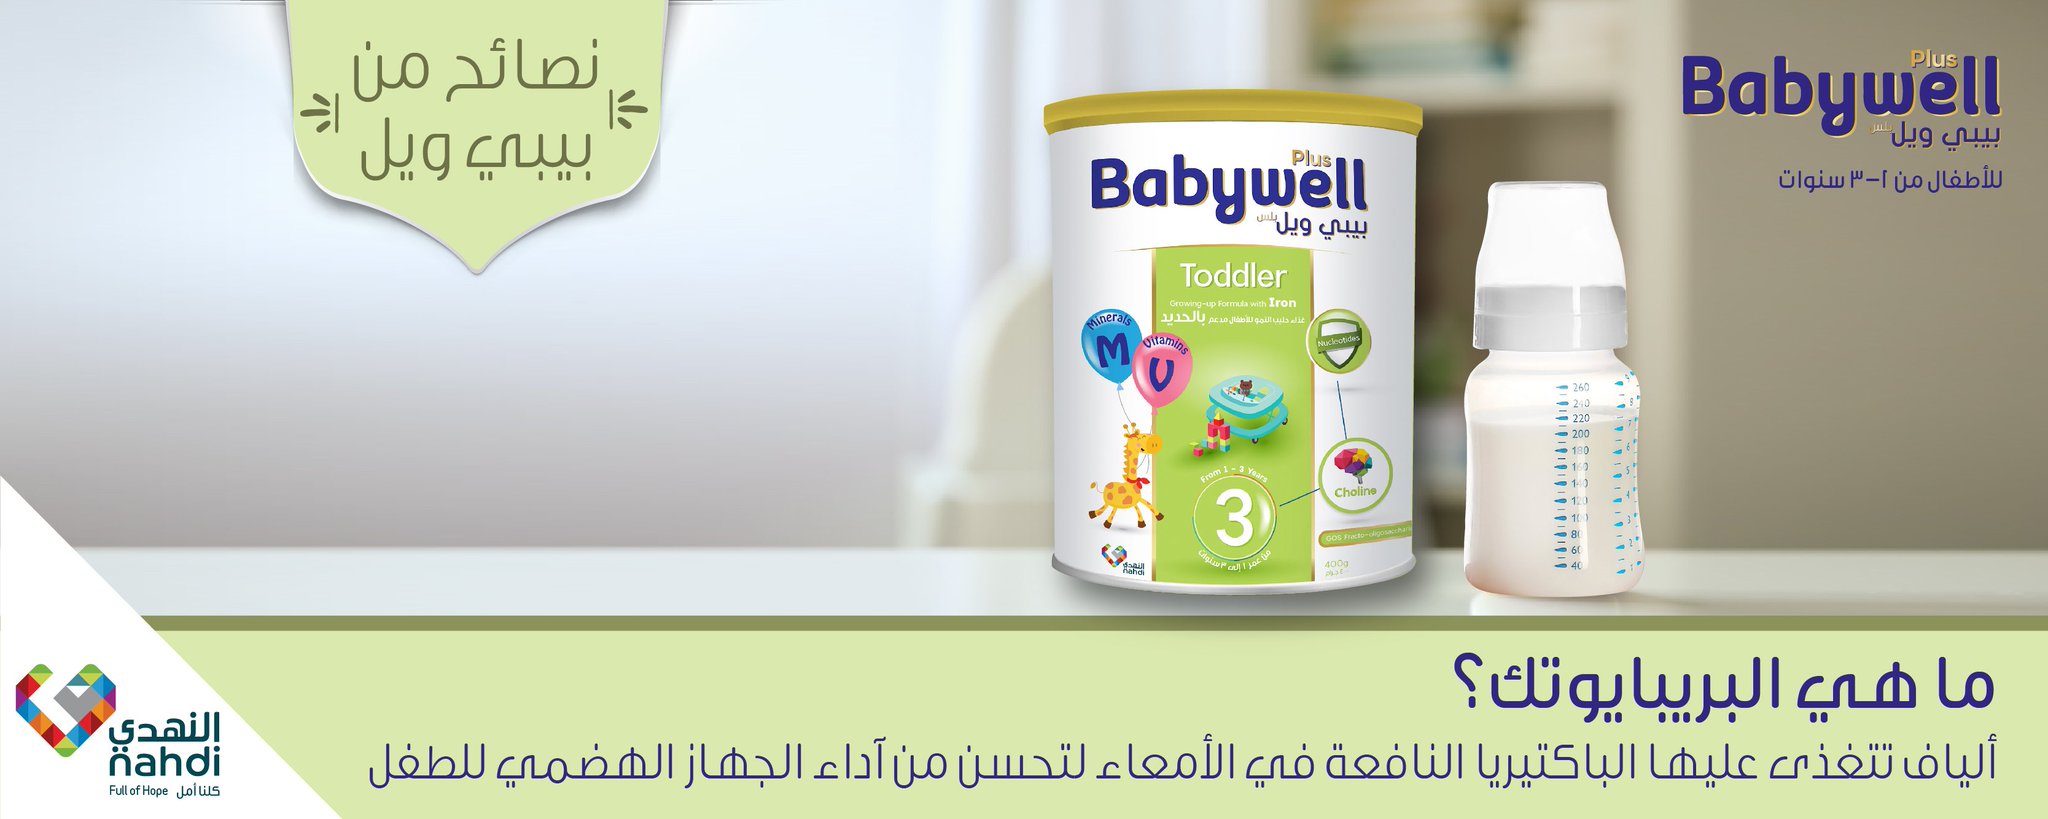 Nahdihope No Twitter Baby Well Baby Milk Plus مدعم بالبريبايوتكس لضمان صحة الجهاز الهضمي لطفلك ومنحه الراحة والصحة والابتسامة Baby Well